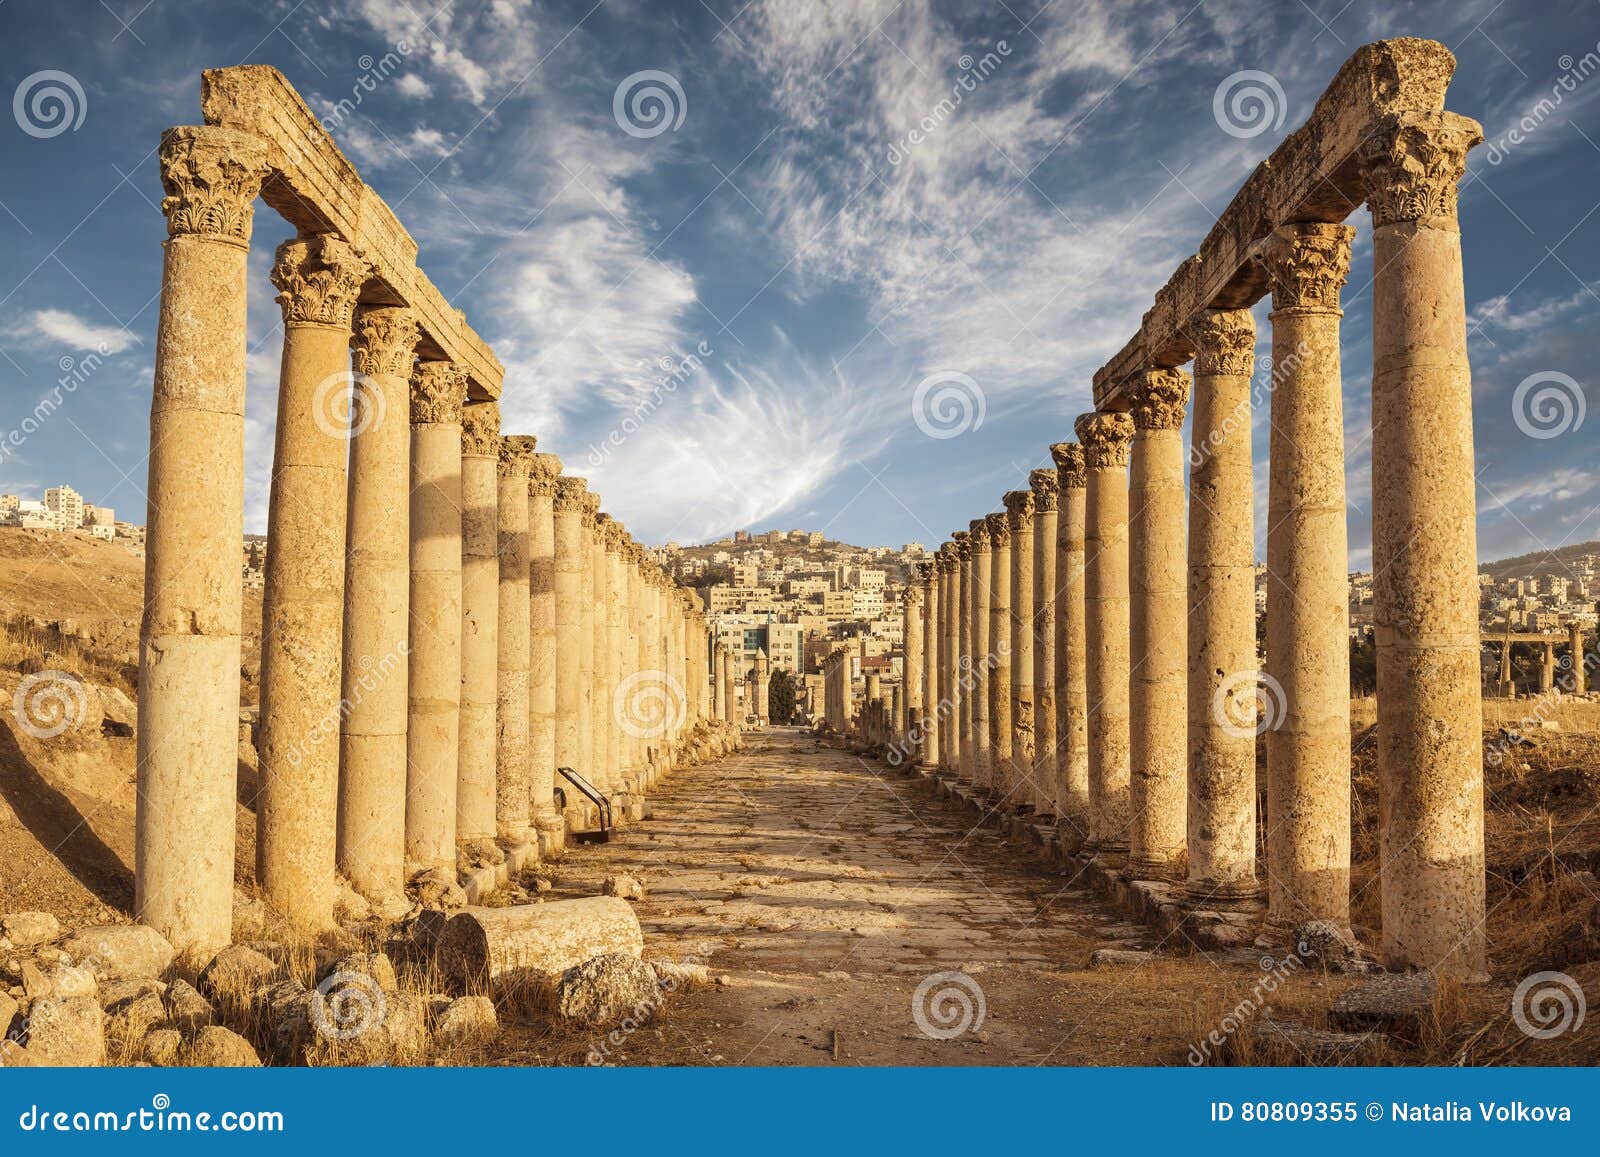 columns of the cardo maximus, ancient roman city of gerasa of antiquity , modern jerash